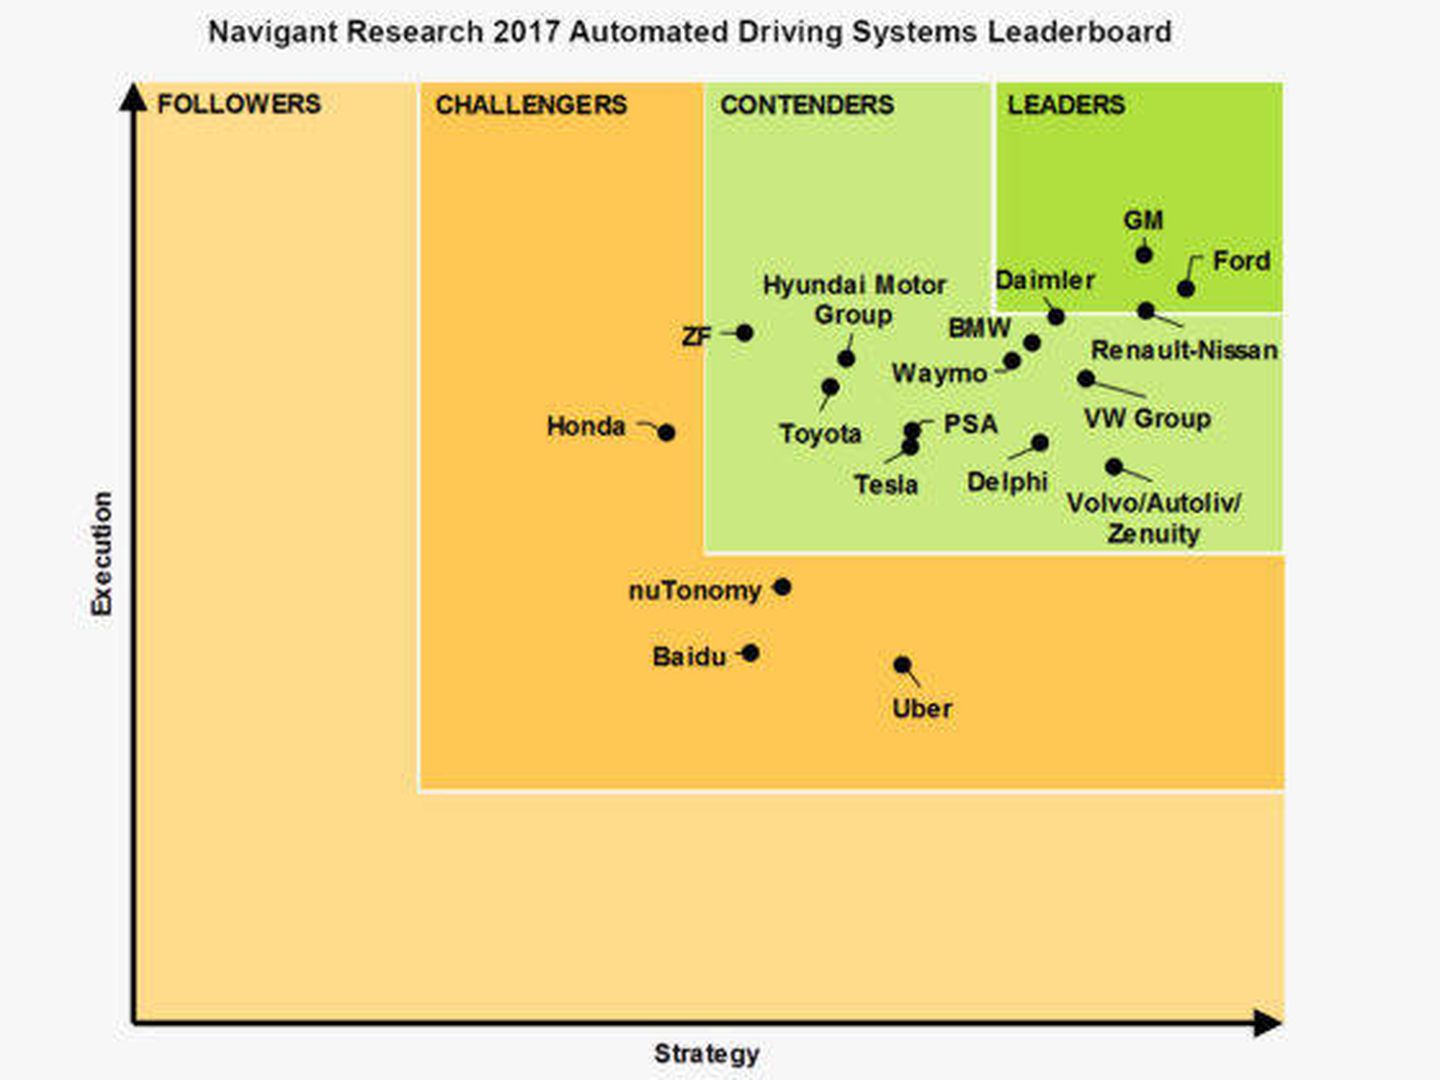 Matriz competitividad coche autónomo - Navigant Research